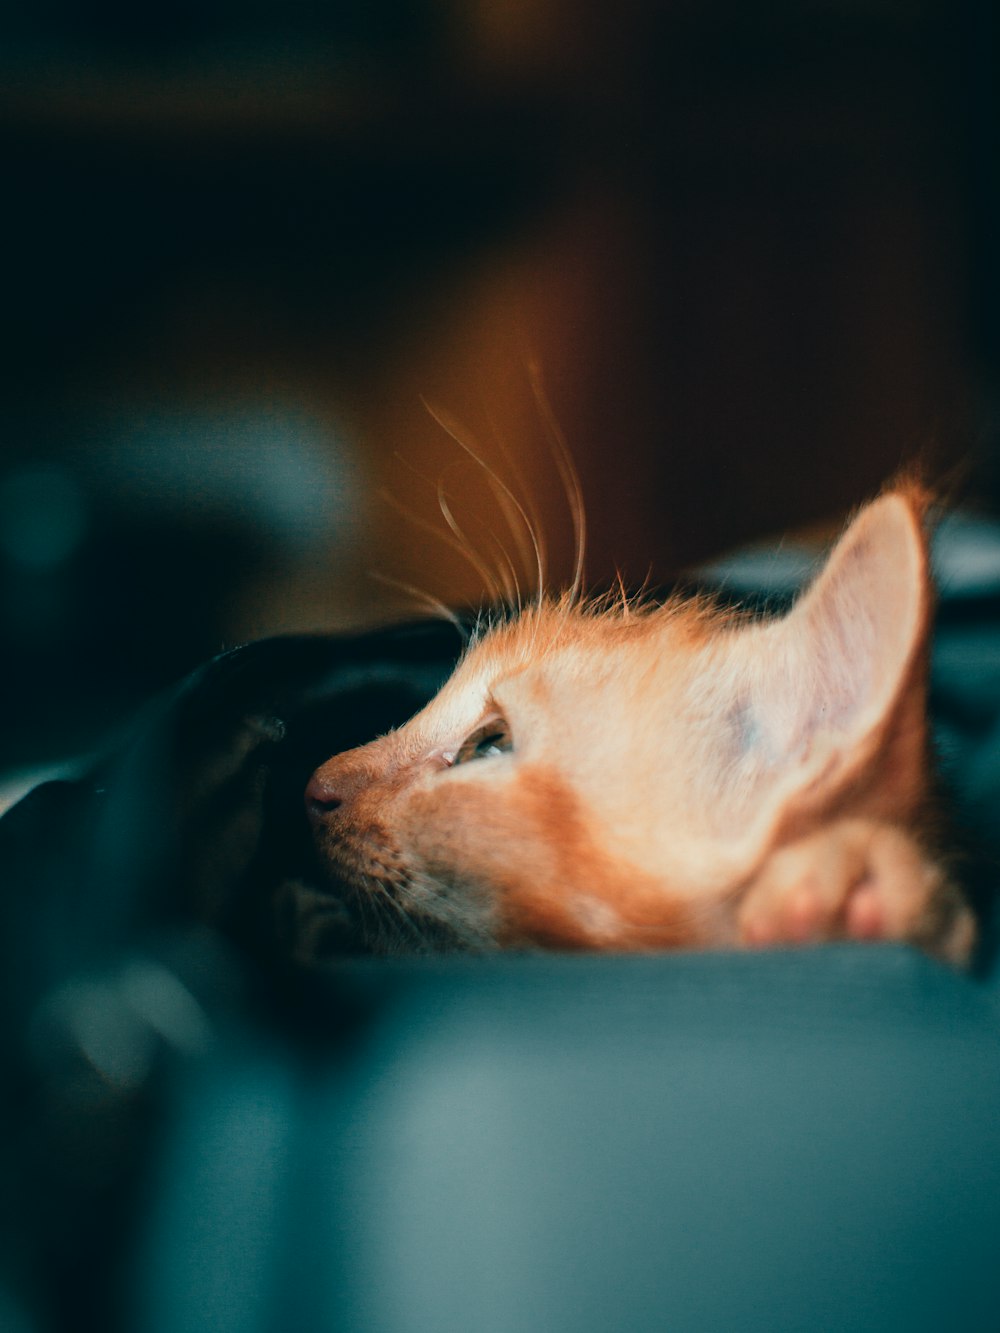 orange tabby cat lying on blue textile